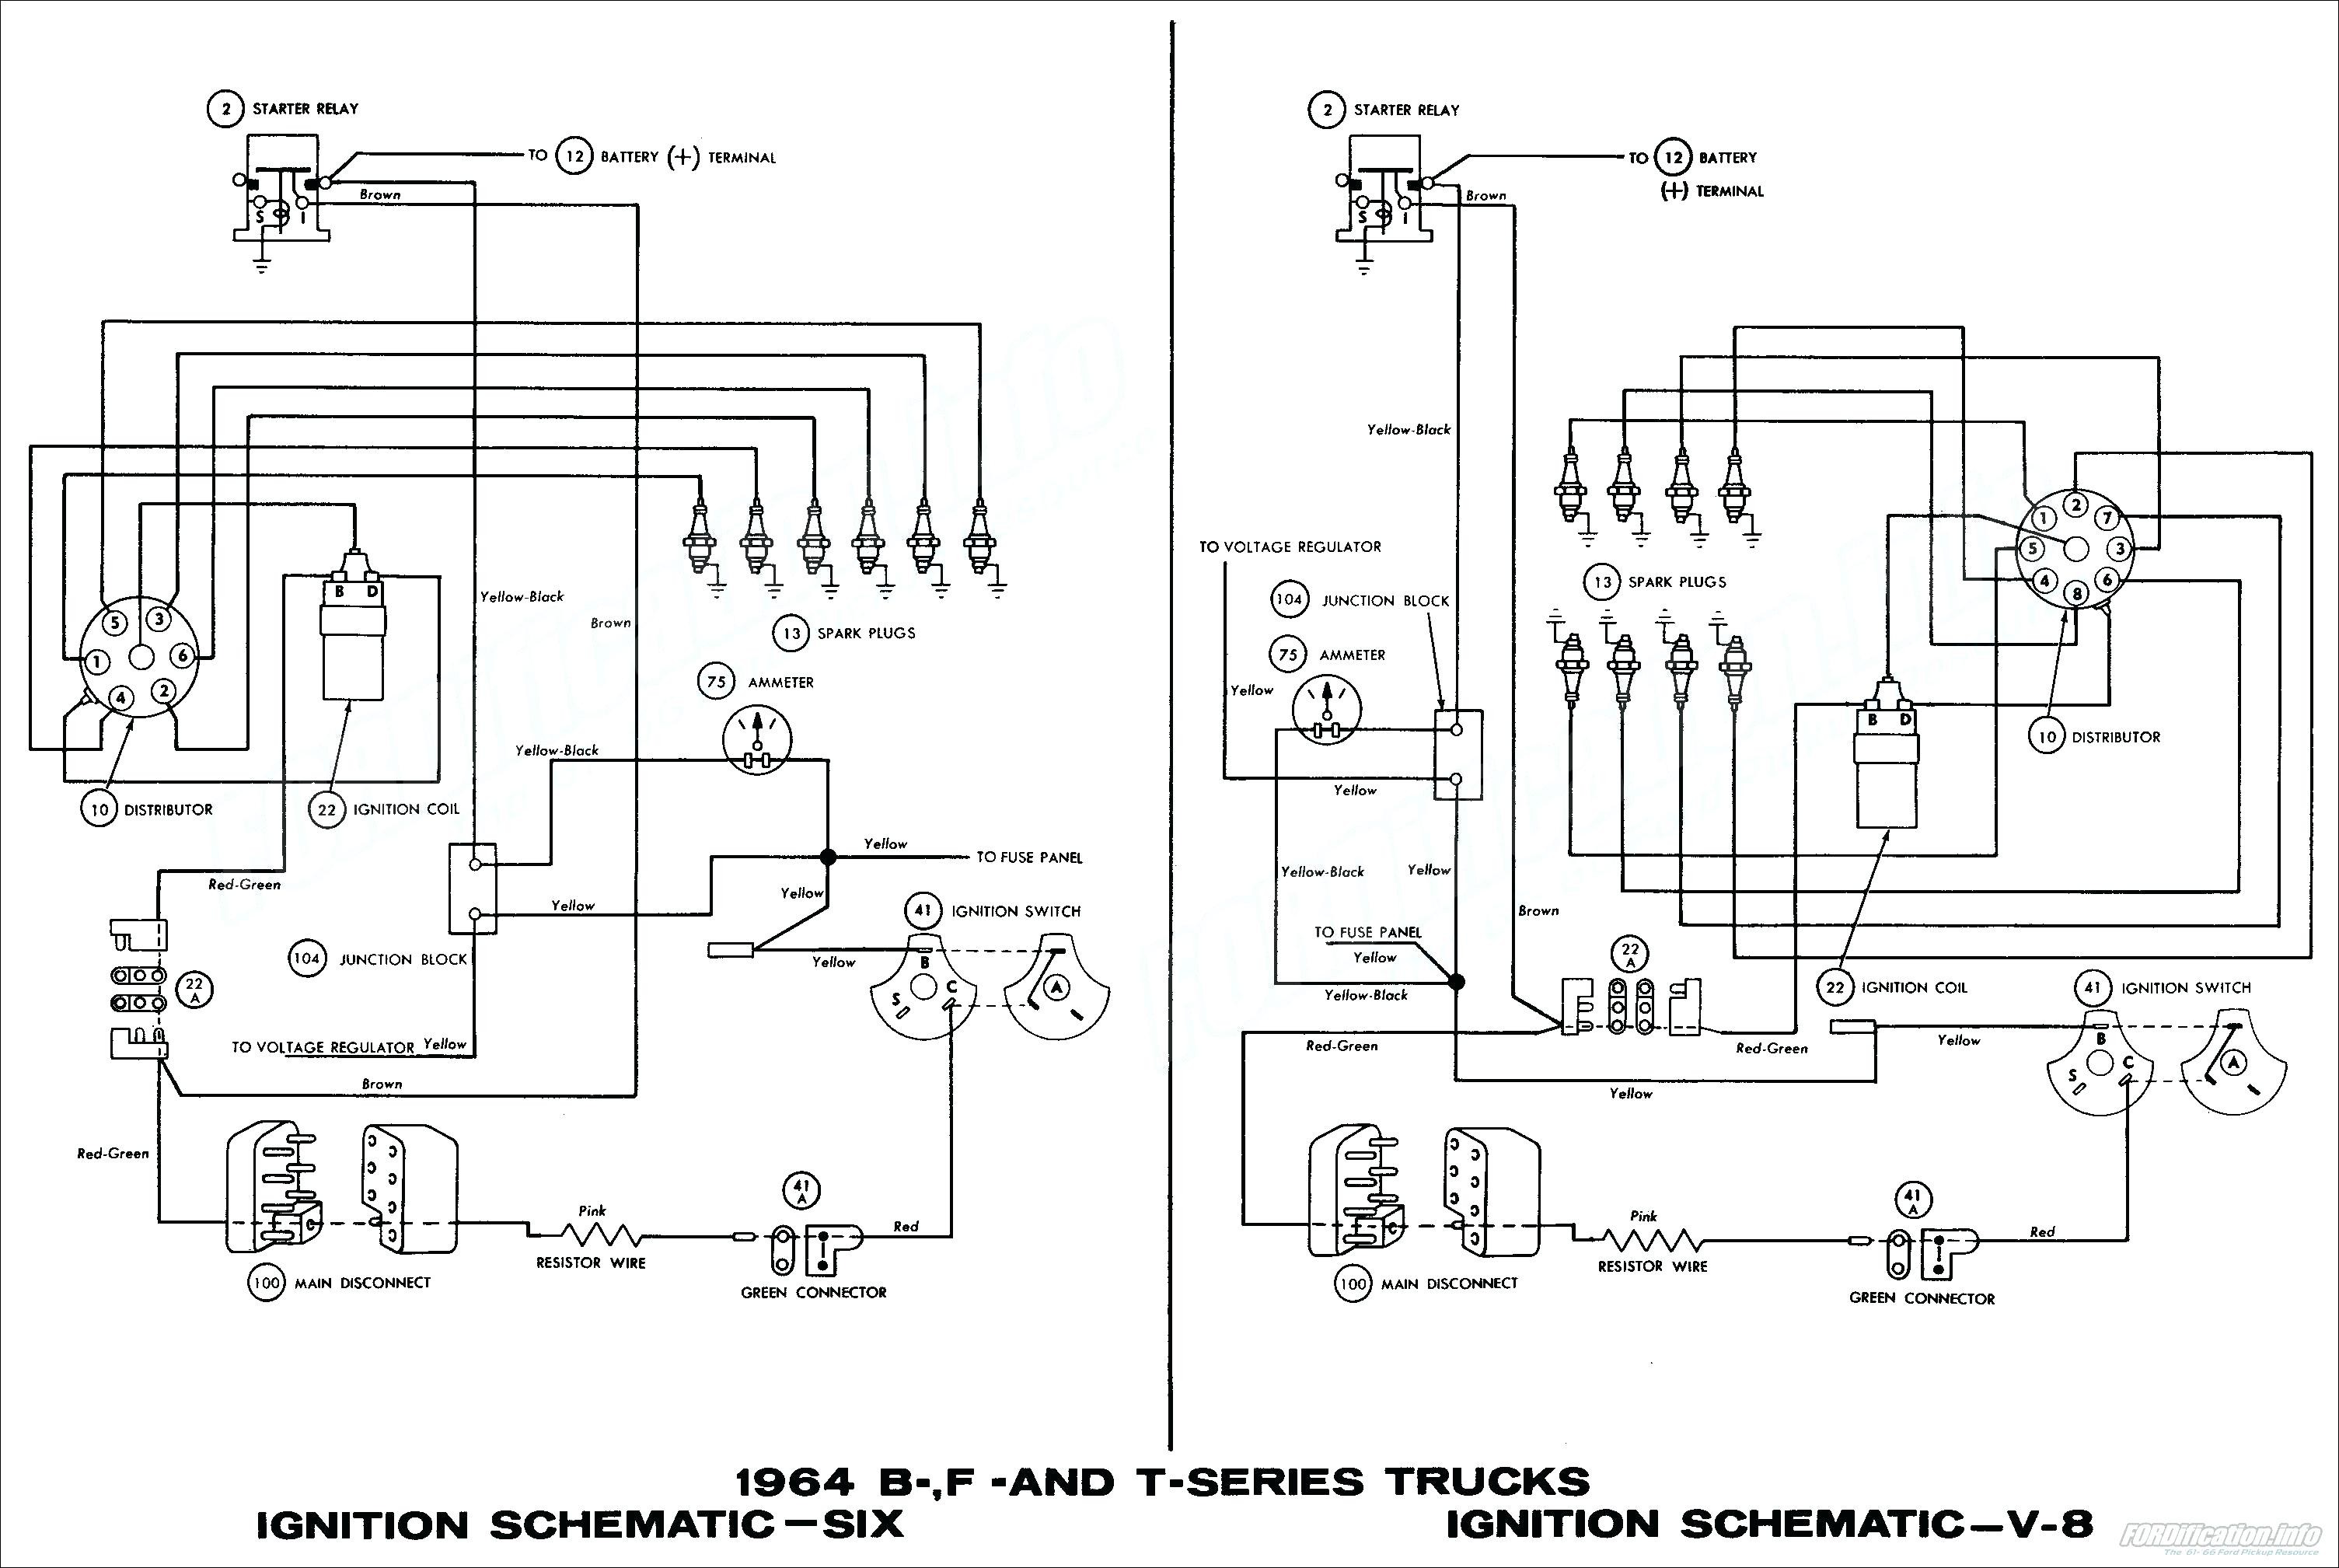 2007 Chrysler 300 Engine Diagram Serpentine Belt Diagram Chrysler 300 Wiring Diagram 7 Pin Plug Of 2007 Chrysler 300 Engine Diagram